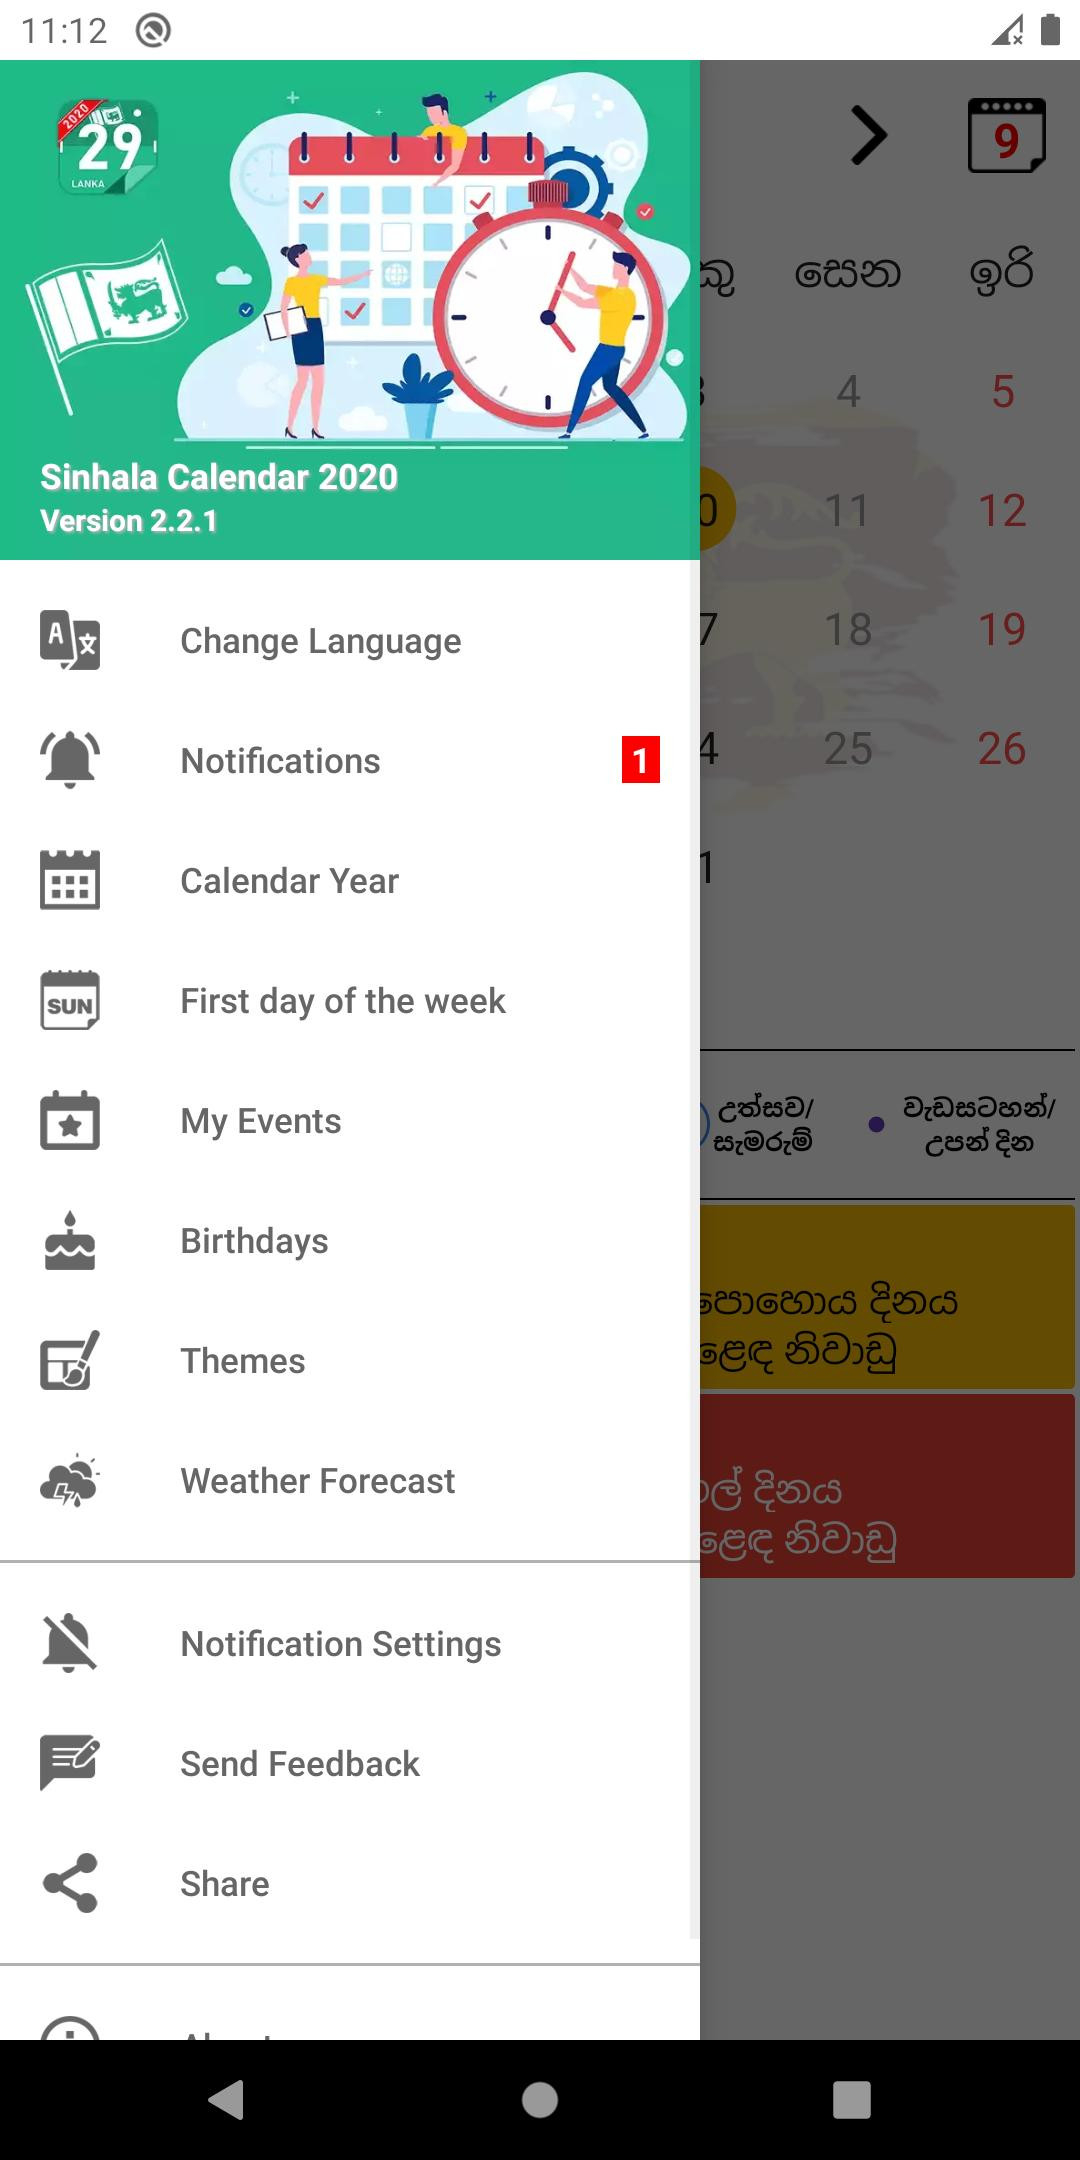 Sri Lanka Calendar 2021 🇱🇰 ¦ Sinhala ¦ Holidays For-Mercantile Holiday Calander In Sri Lanka 2021